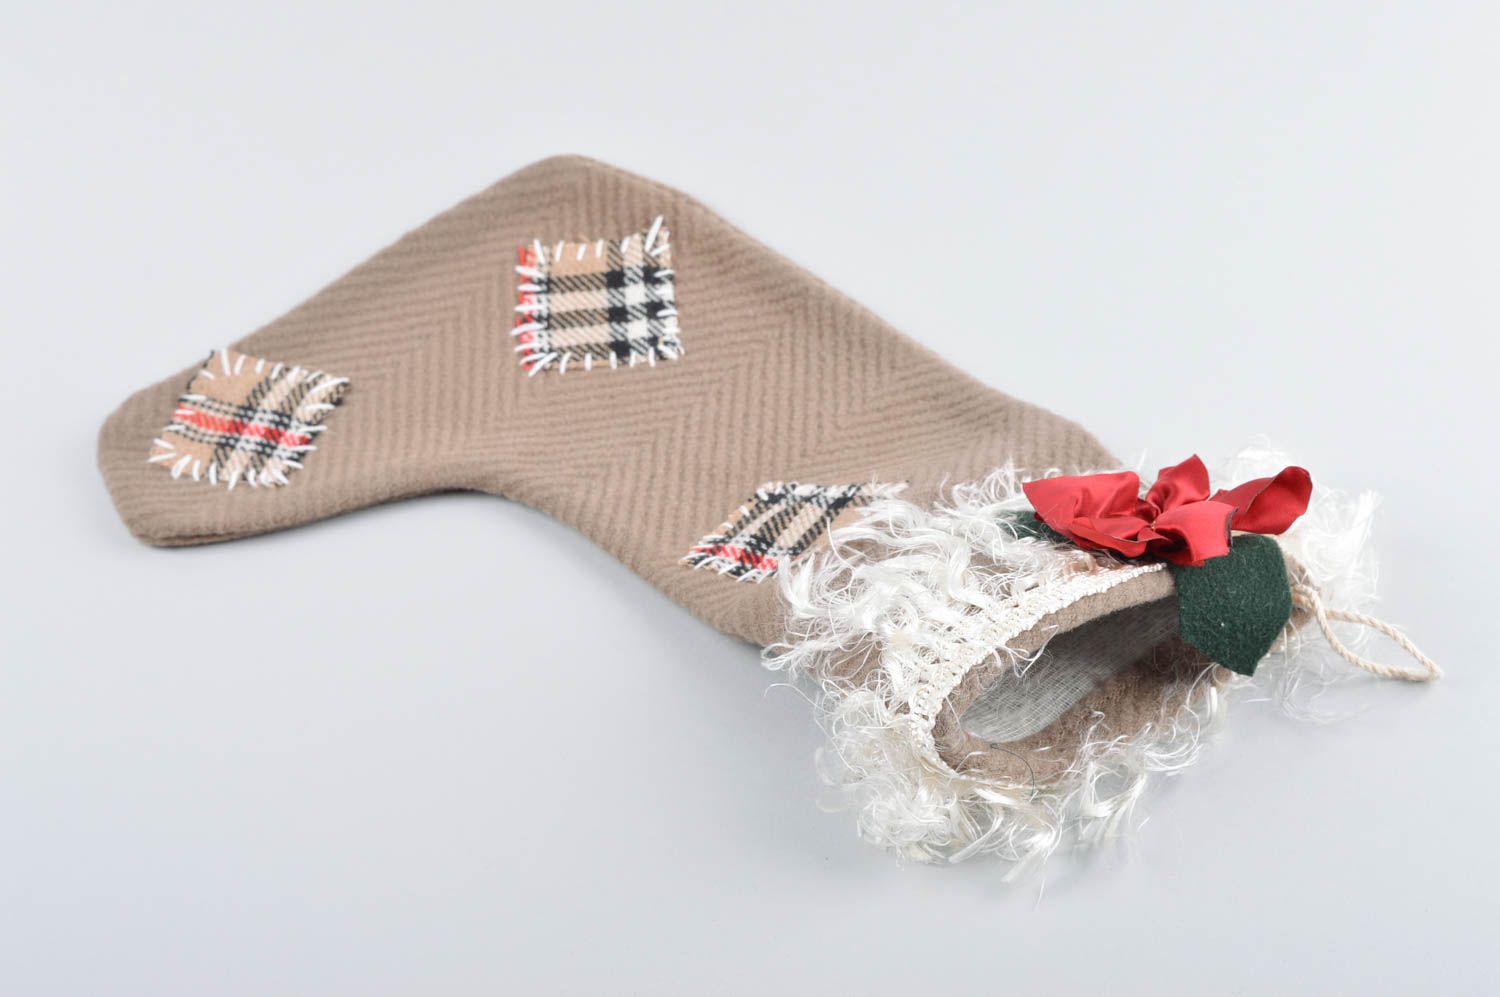 Homemade home decor Christmas stockings Xmas stockings souvenir ideas cool gifts photo 5